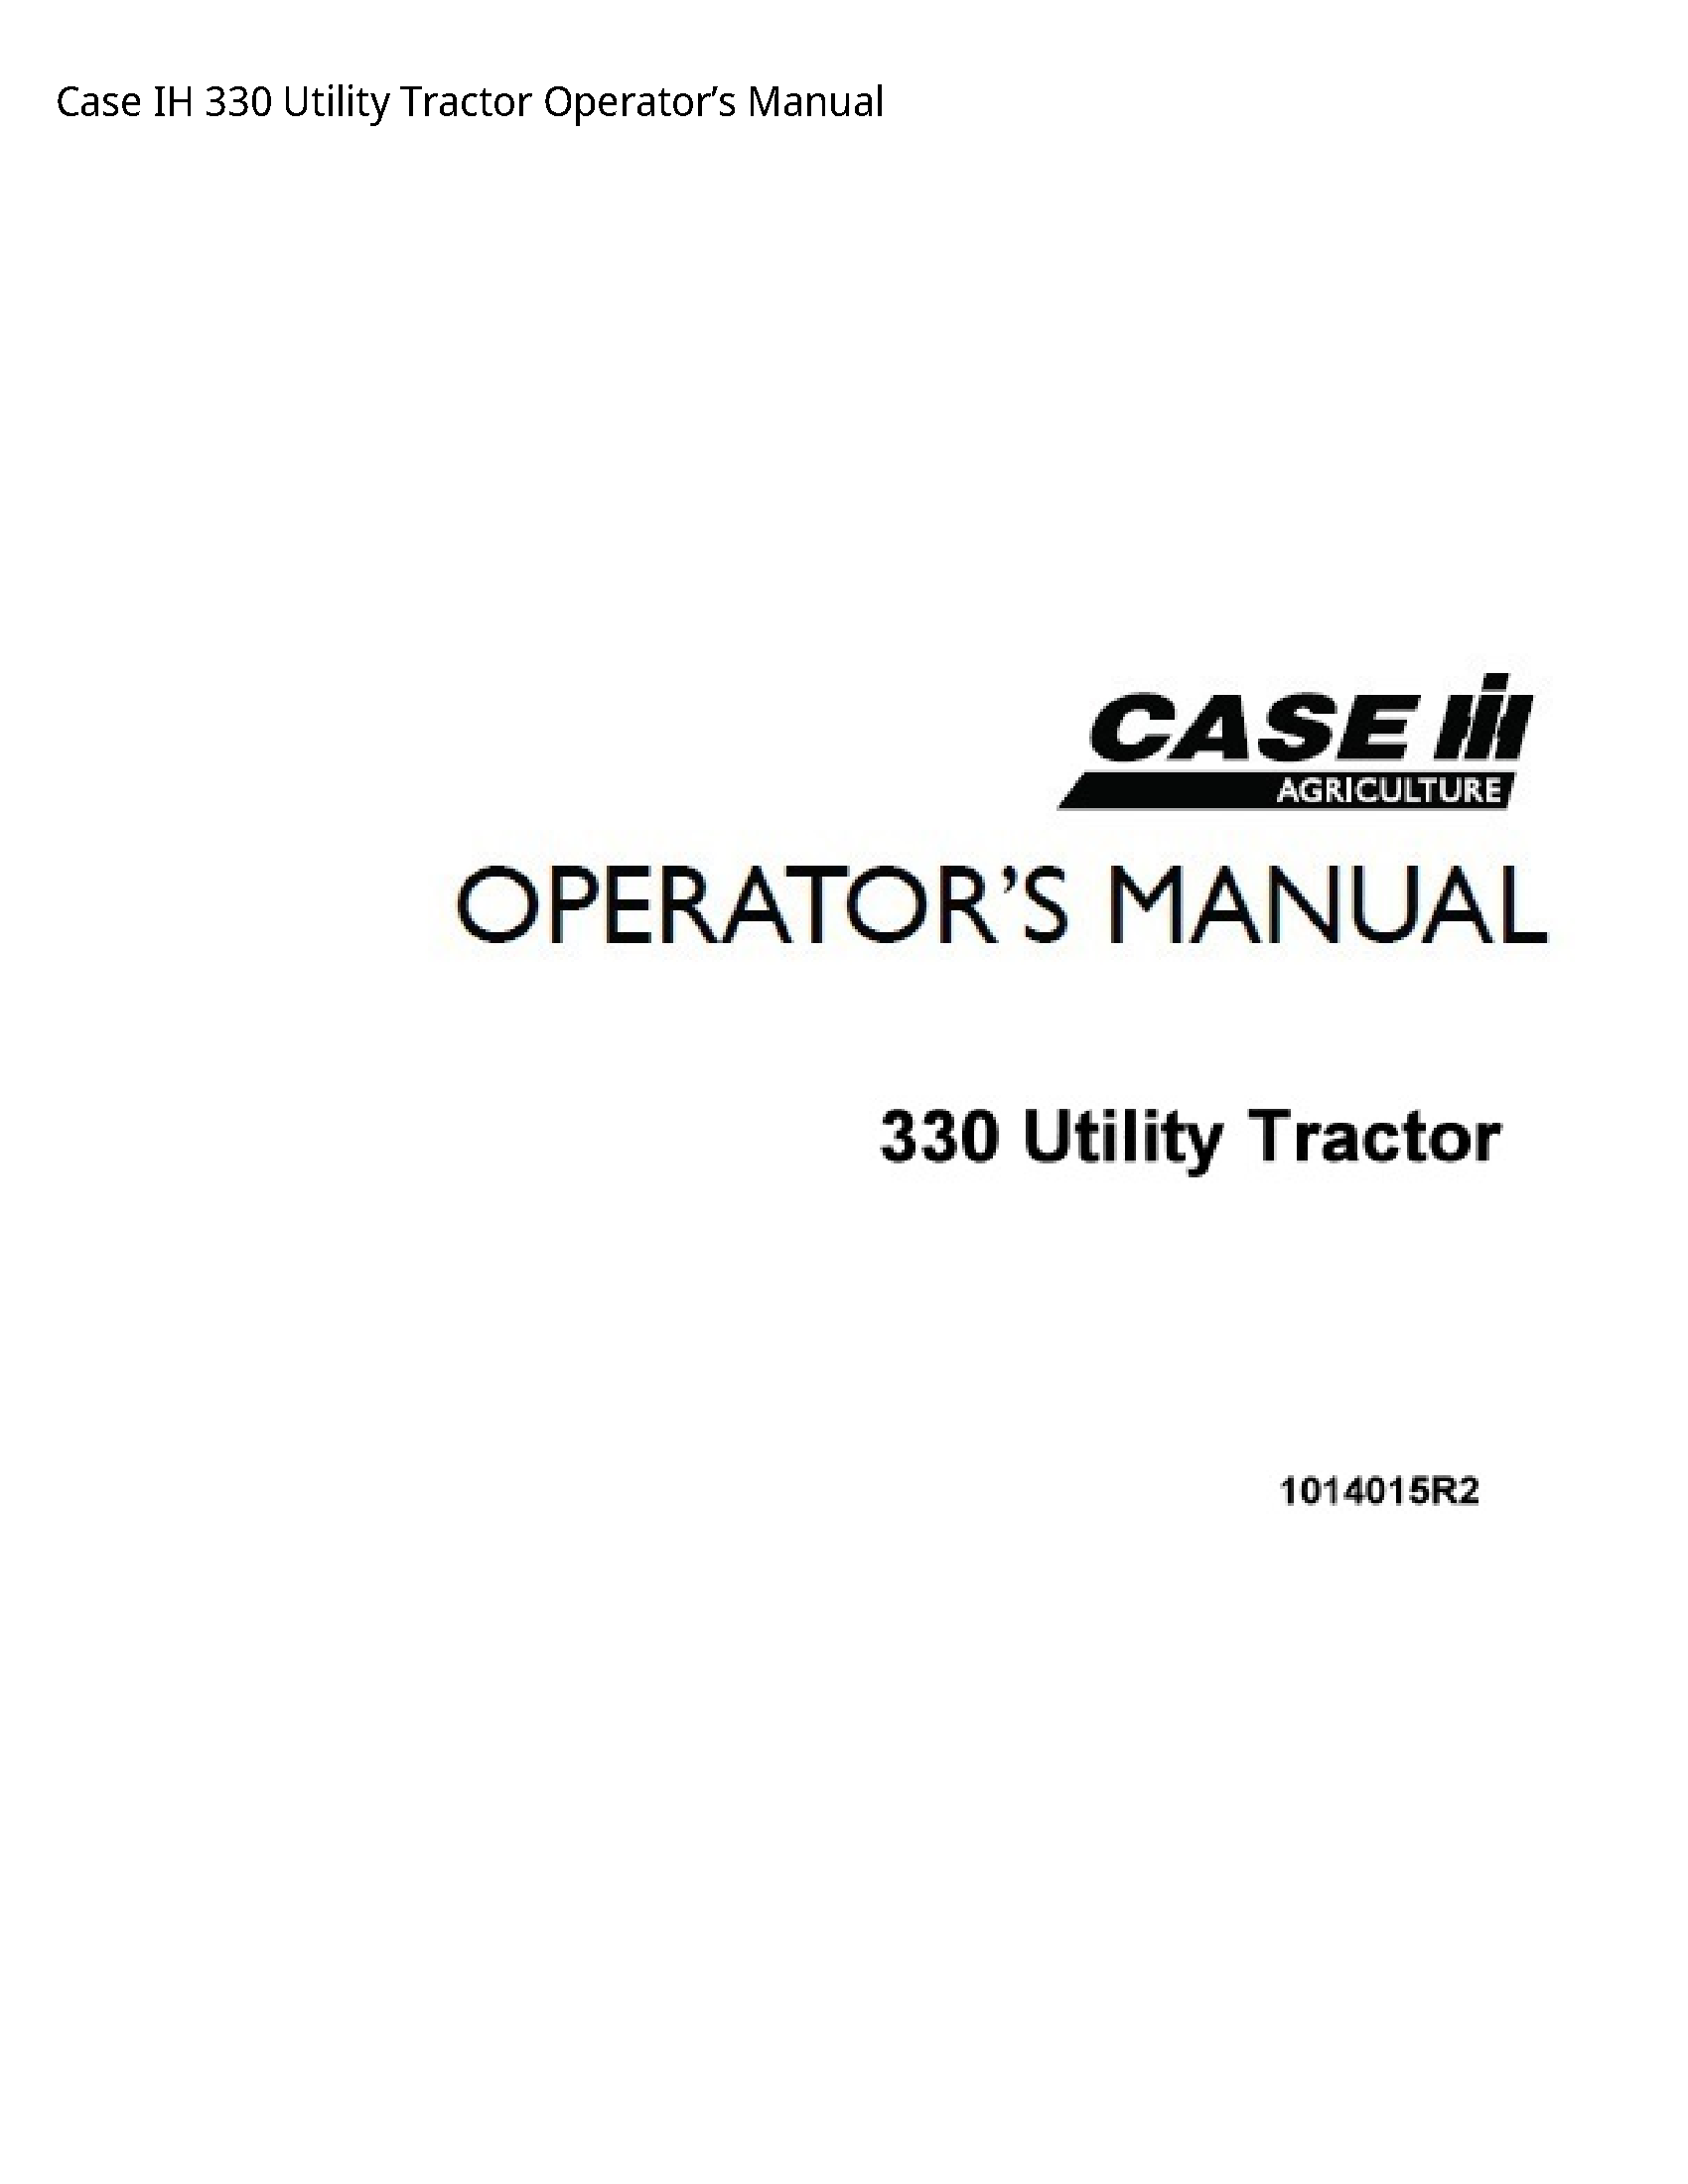 Case/Case IH 330 IH Utility Tractor Operator’s manual